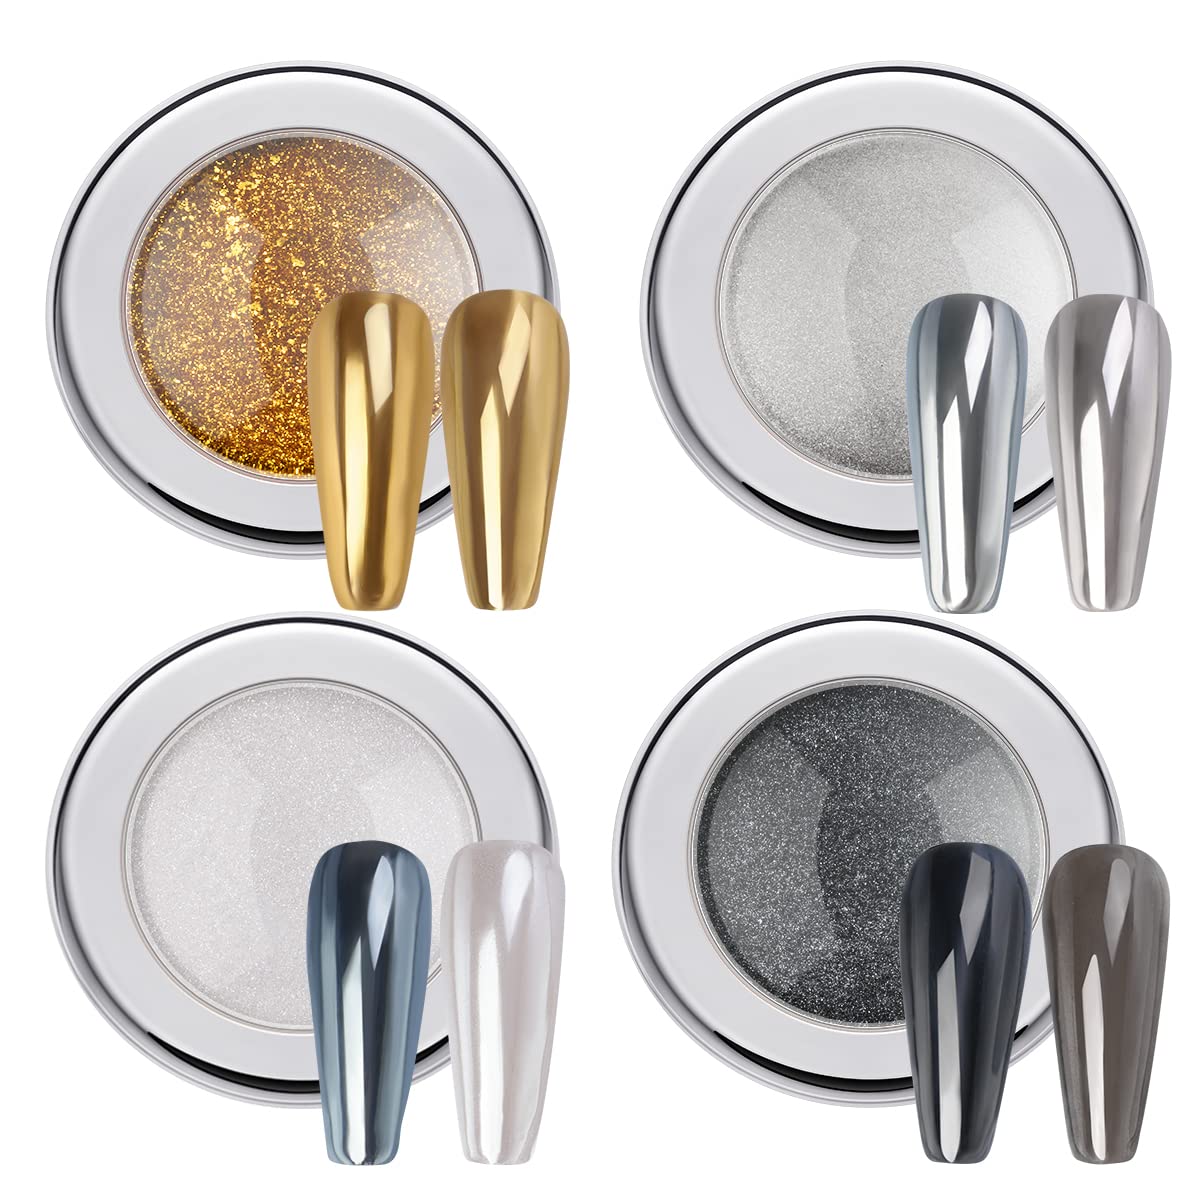  PrettyDiva Chrome Nail Powder Set- 4 Jars of Nail Chrome Powder  Nail Art Mirror Glitter Effect Metal Chrome Powder in Gold, Silver, Black,  and White : Beauty & Personal Care